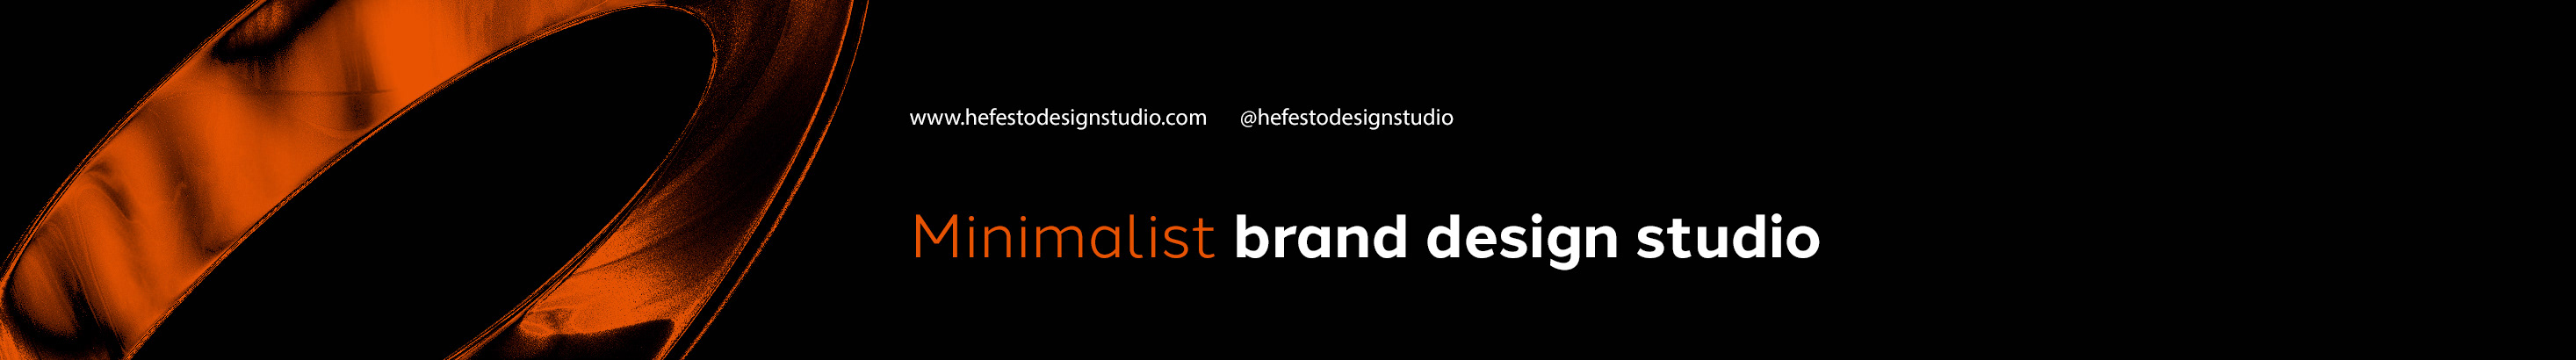 Hefesto Design Studio's profile banner